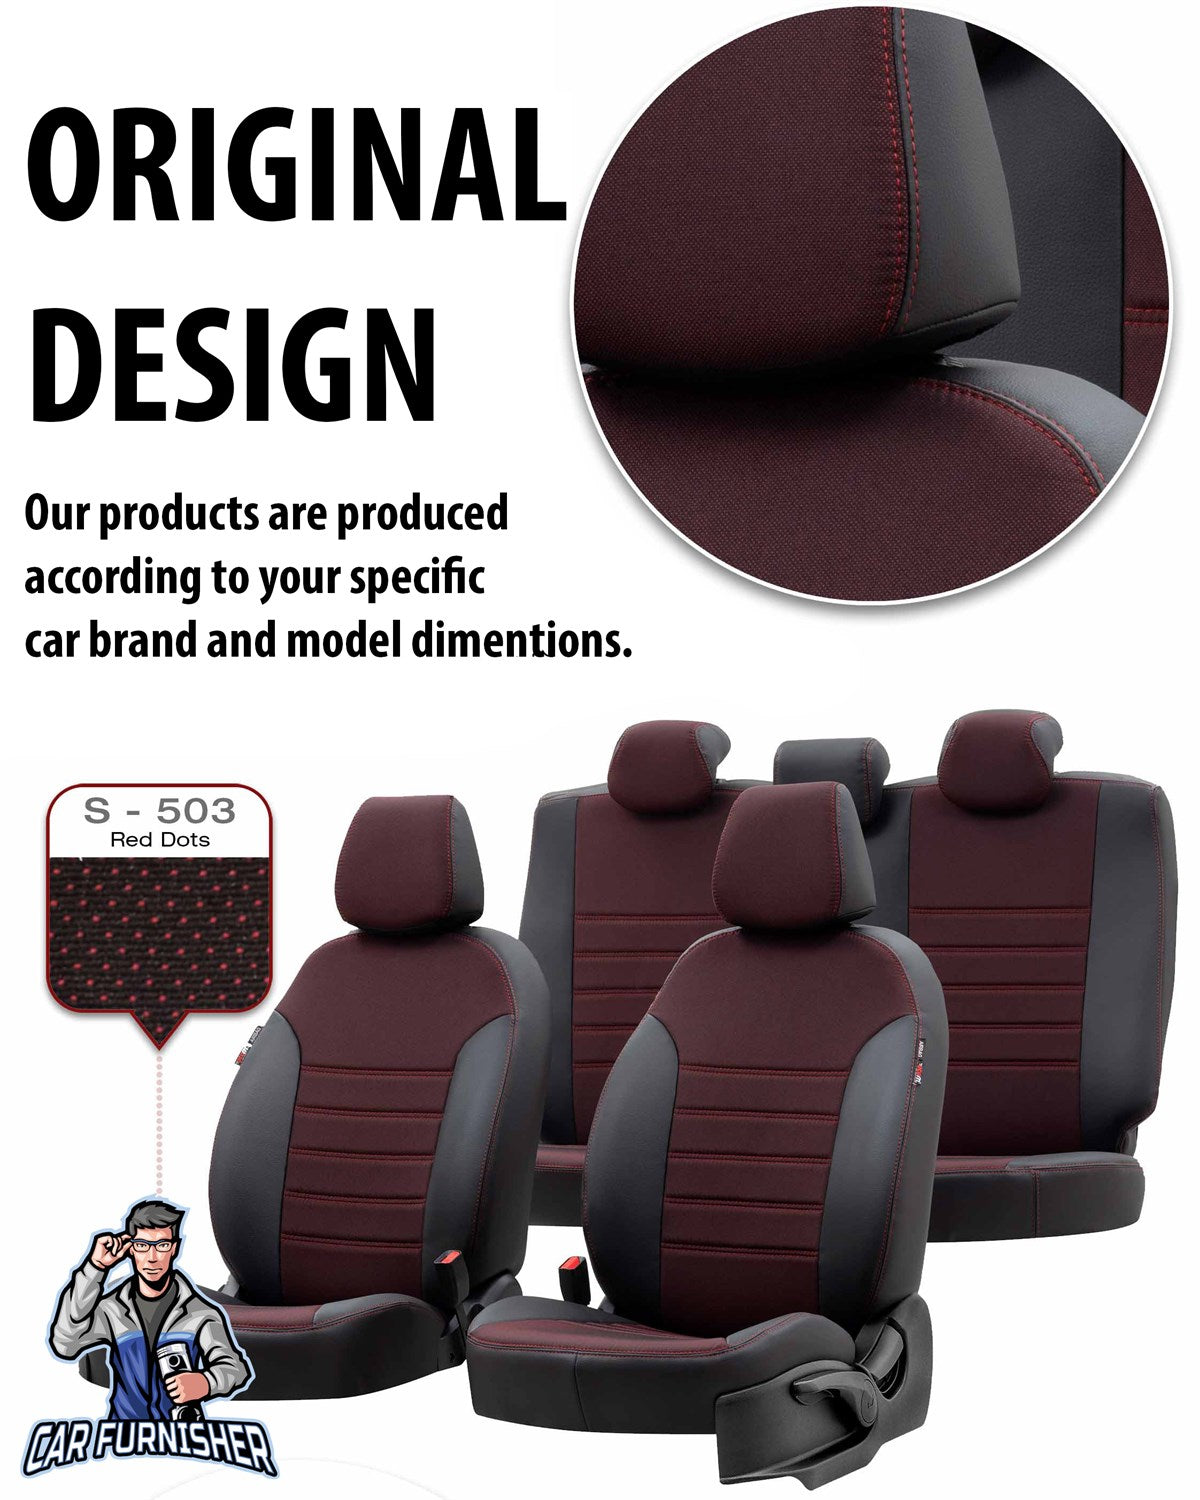 Nissan Qashqai Seat Covers Paris Leather & Jacquard Design Beige Leather & Jacquard Fabric